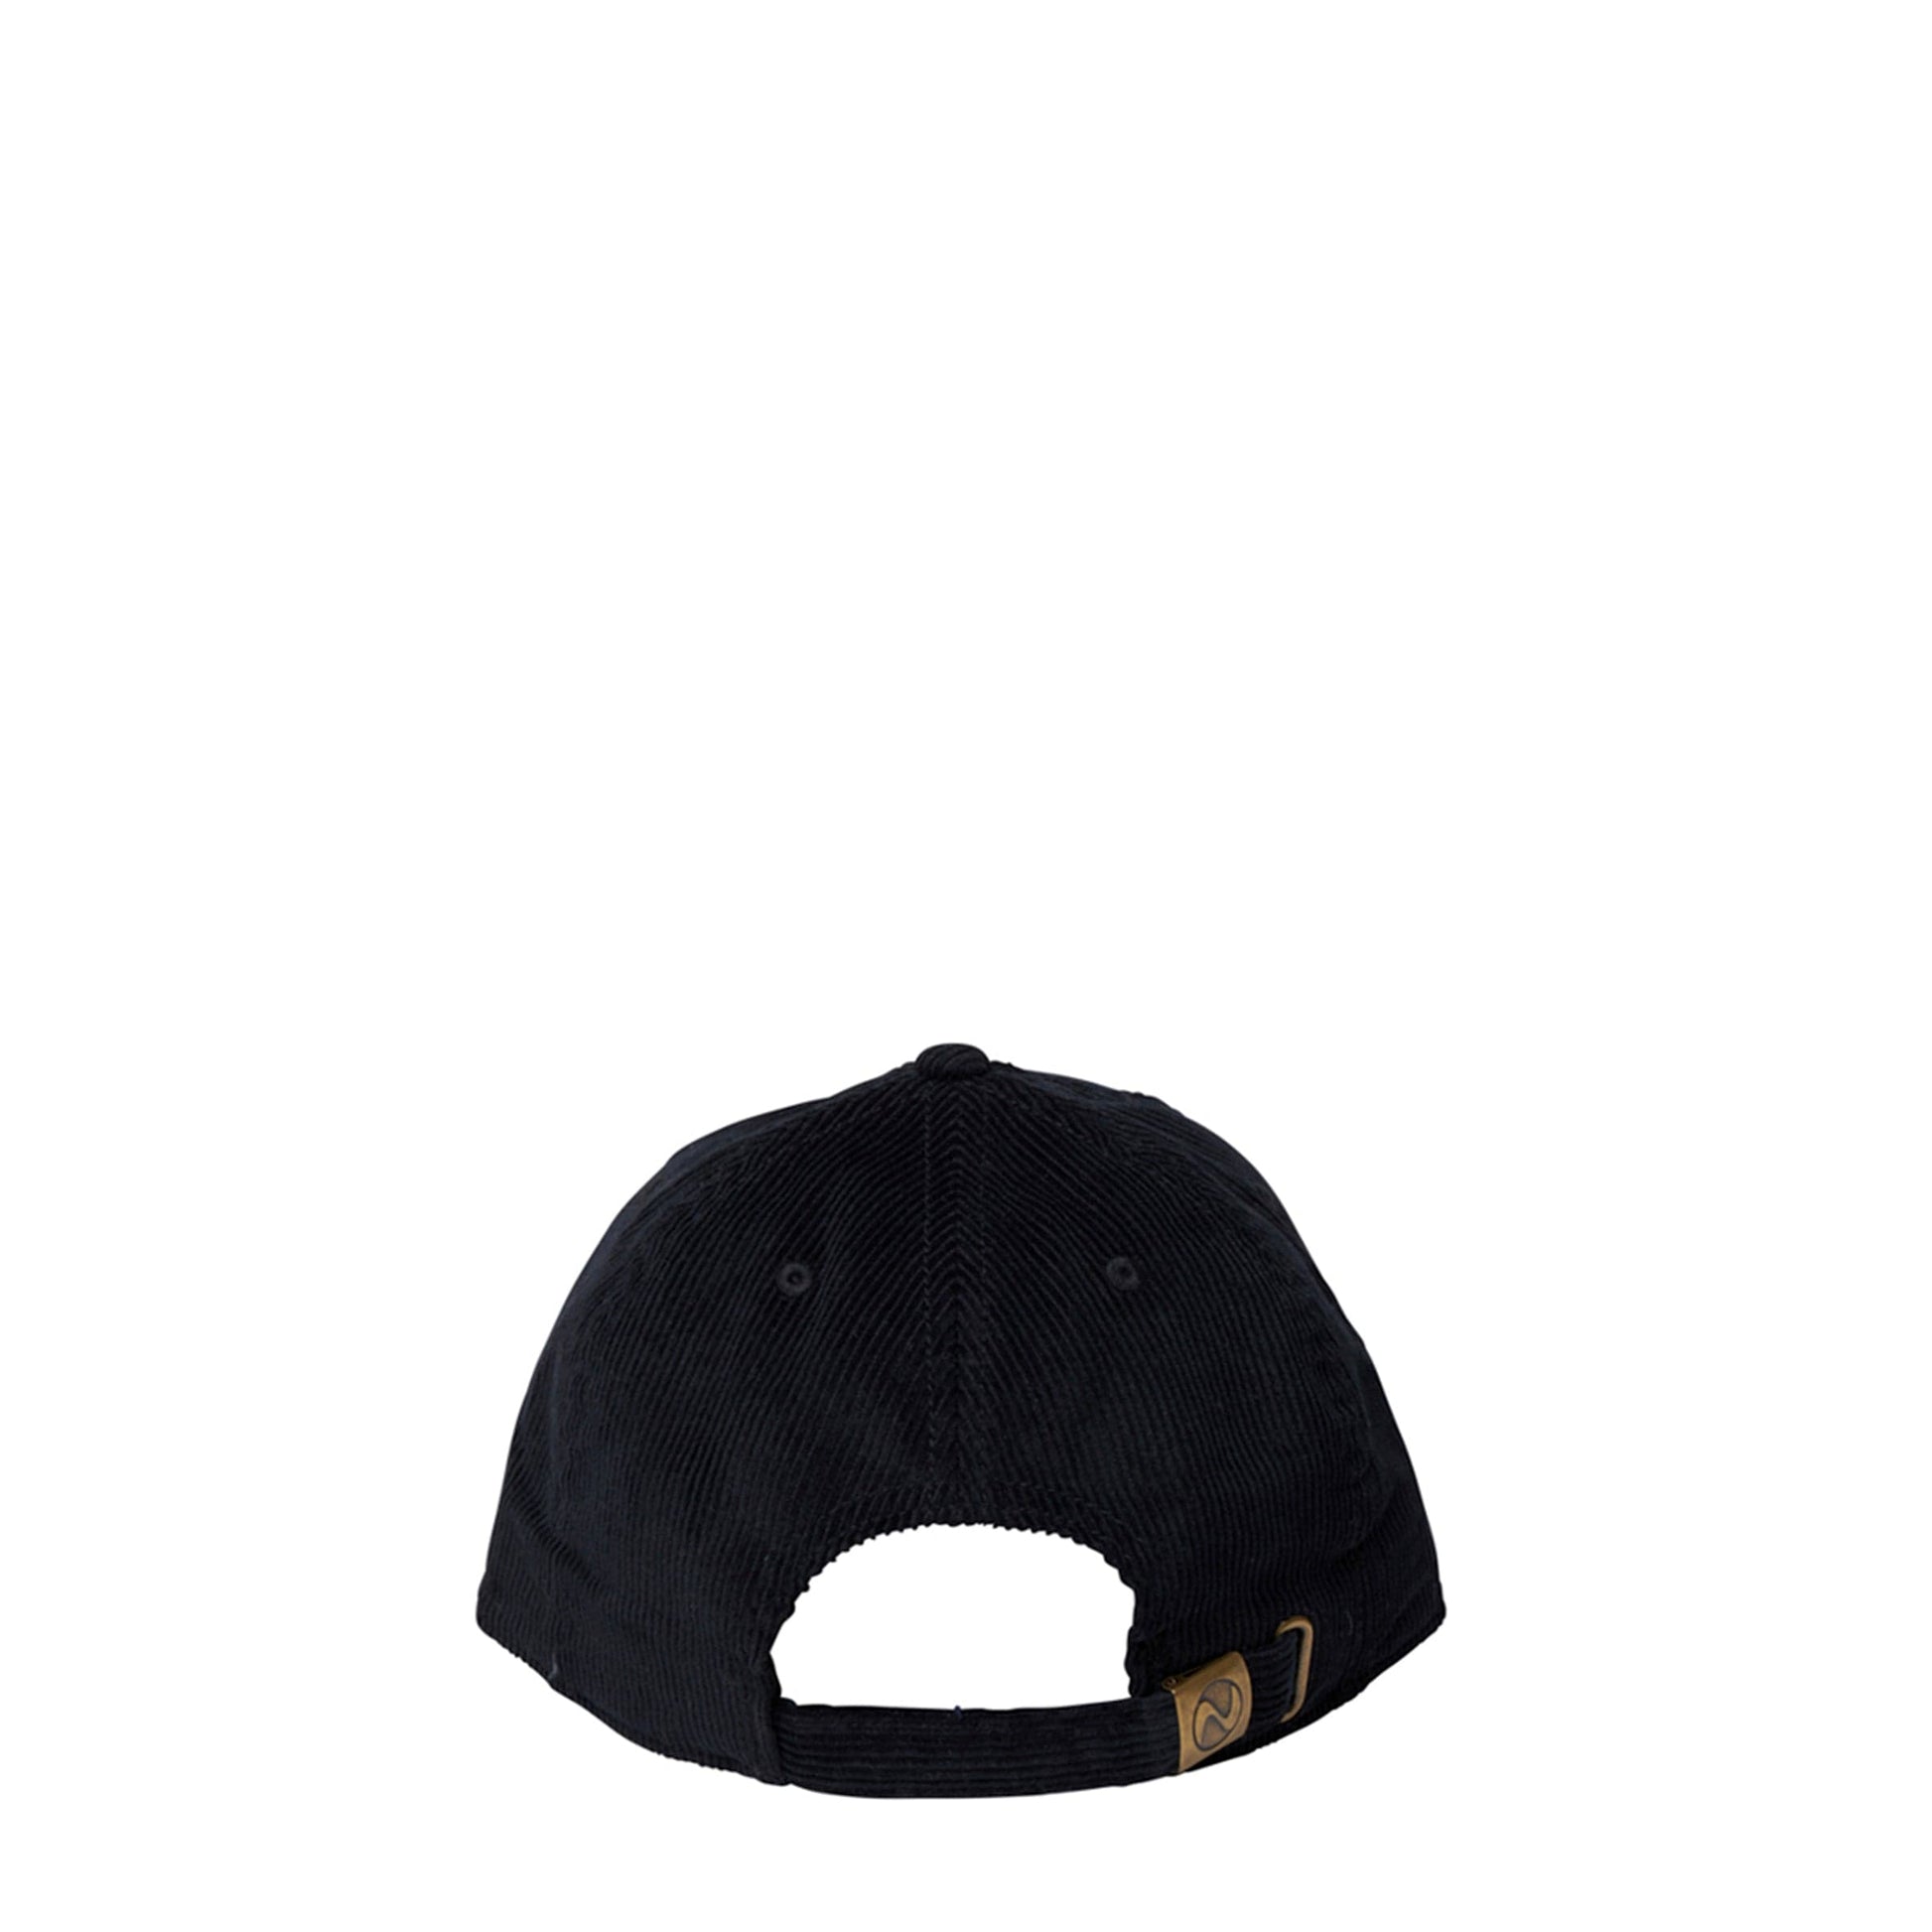 Liberaiders Headwear BLACK / O/S SUNSHINE LOGO CAP